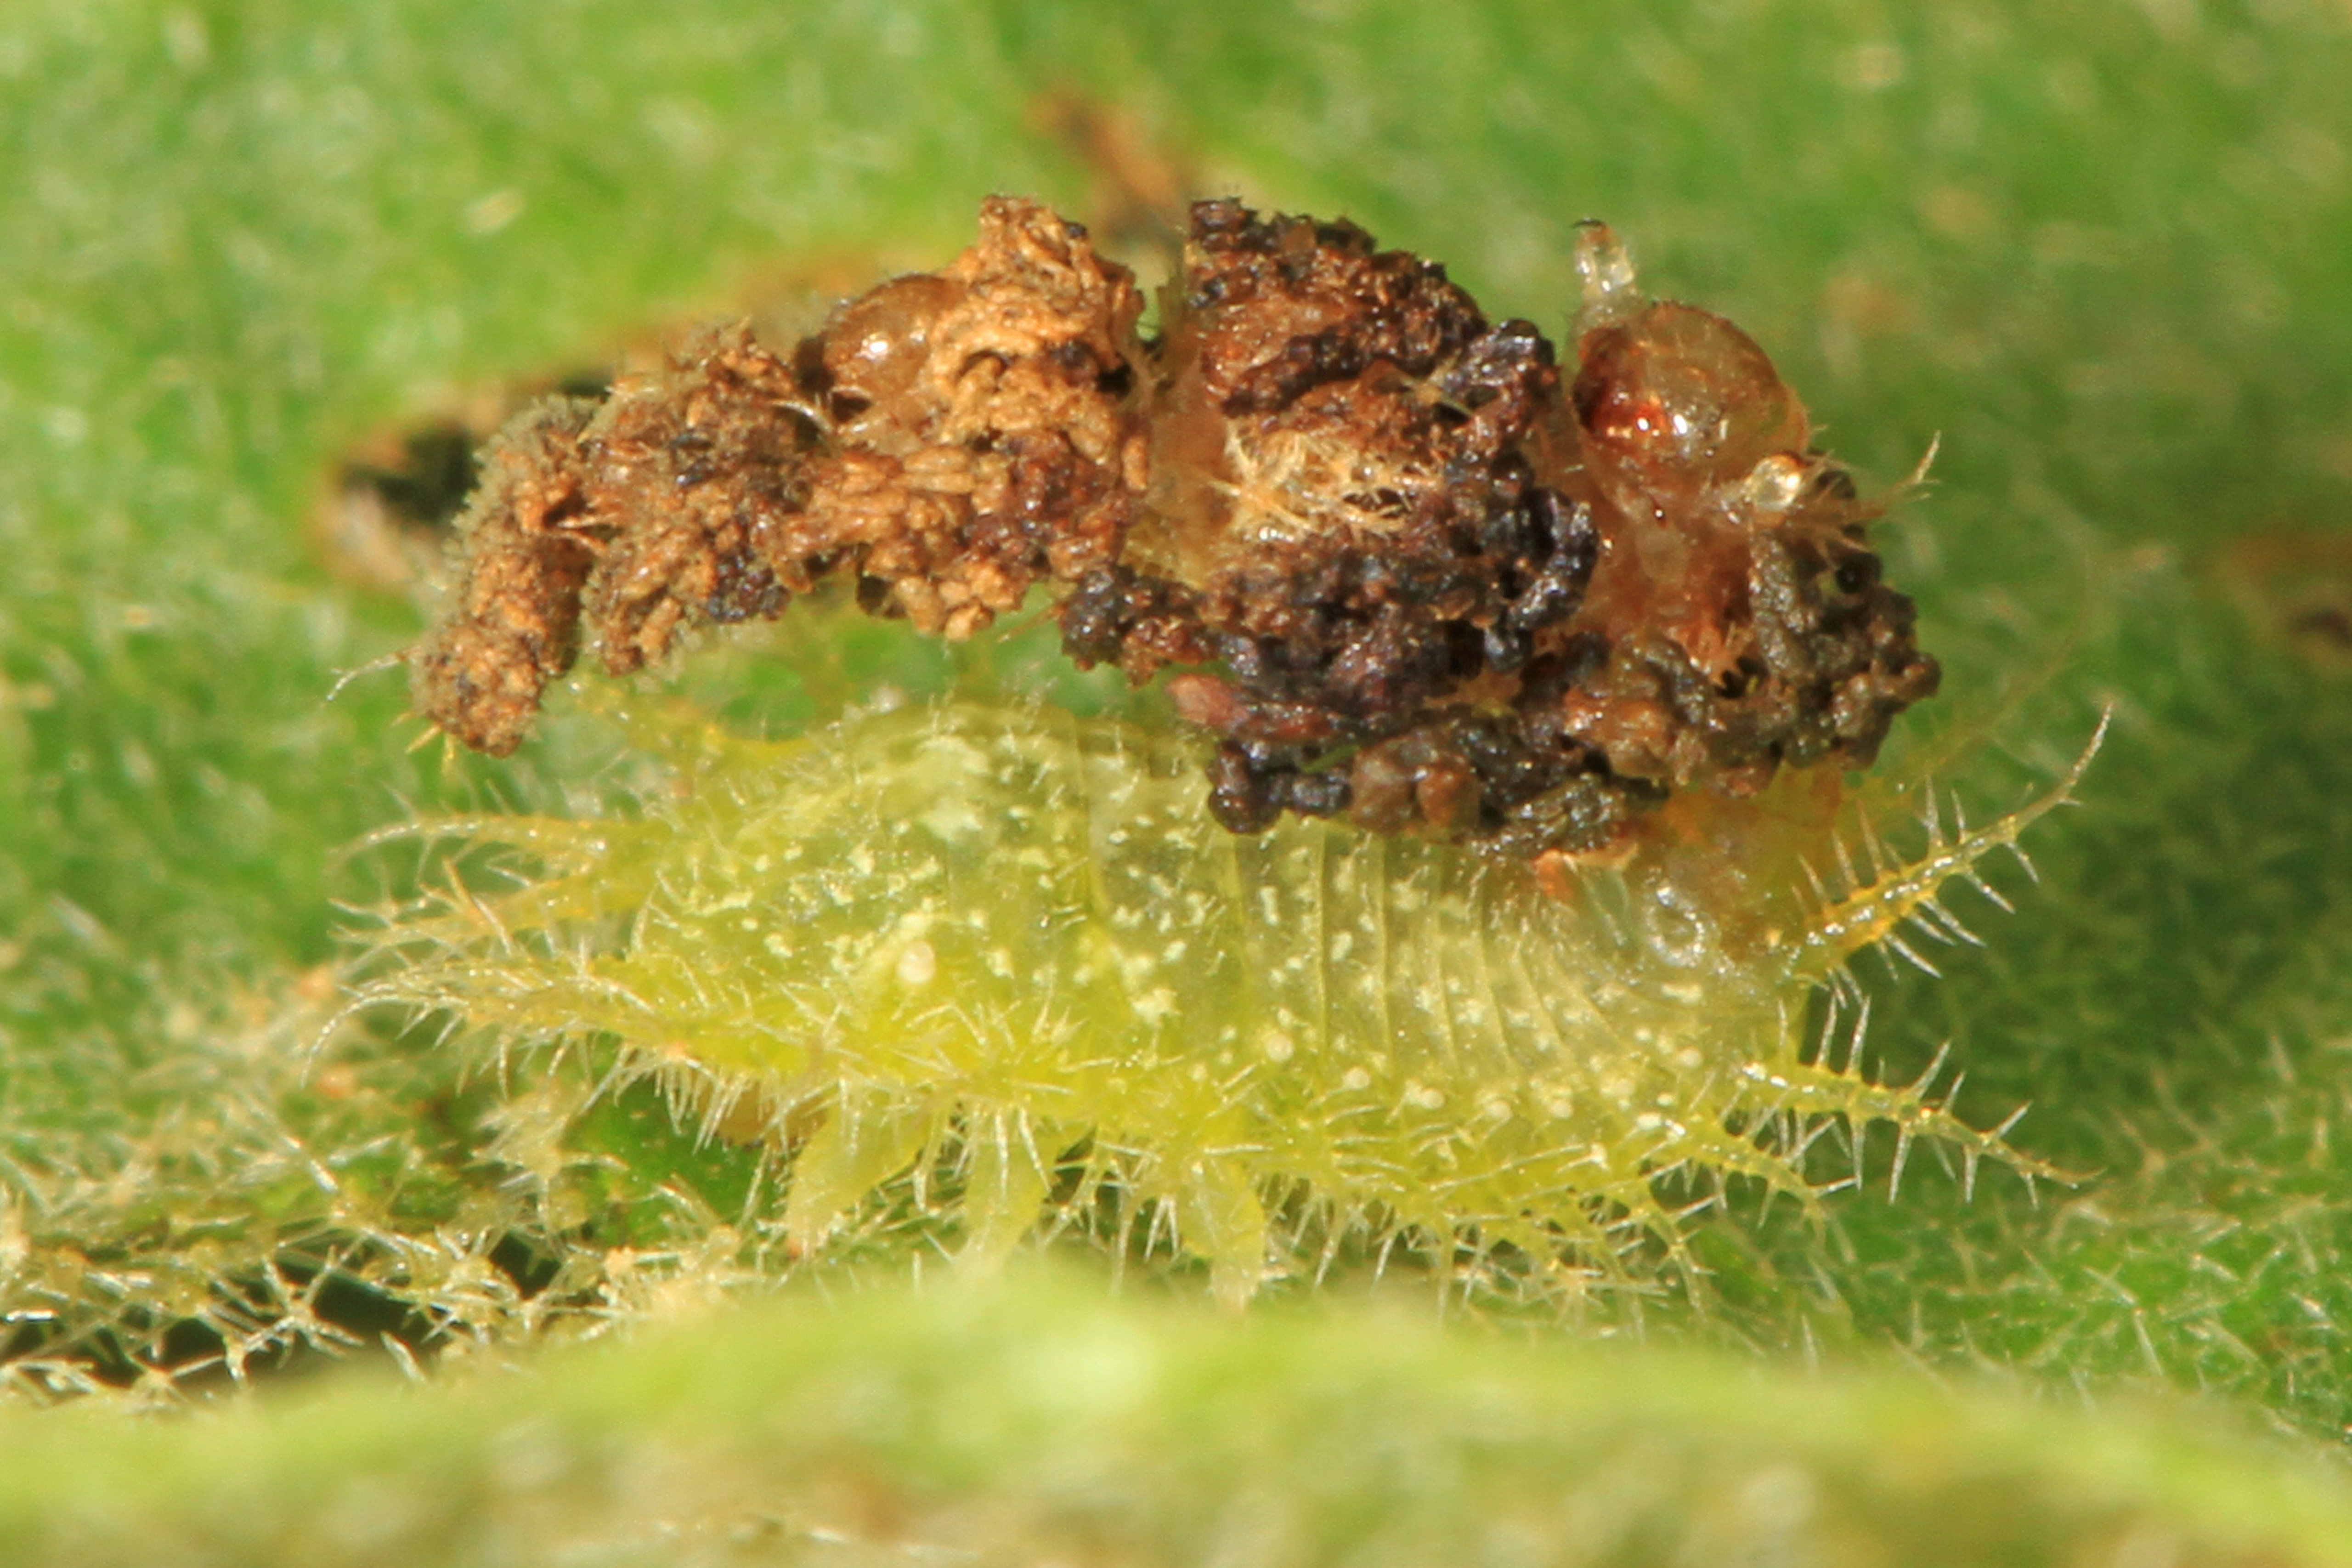 Eggplant Tortoise Beetle larva - Gratiana pallidula with poop shield, Meadowood Farm SRMA, Mason Neck, Virginia